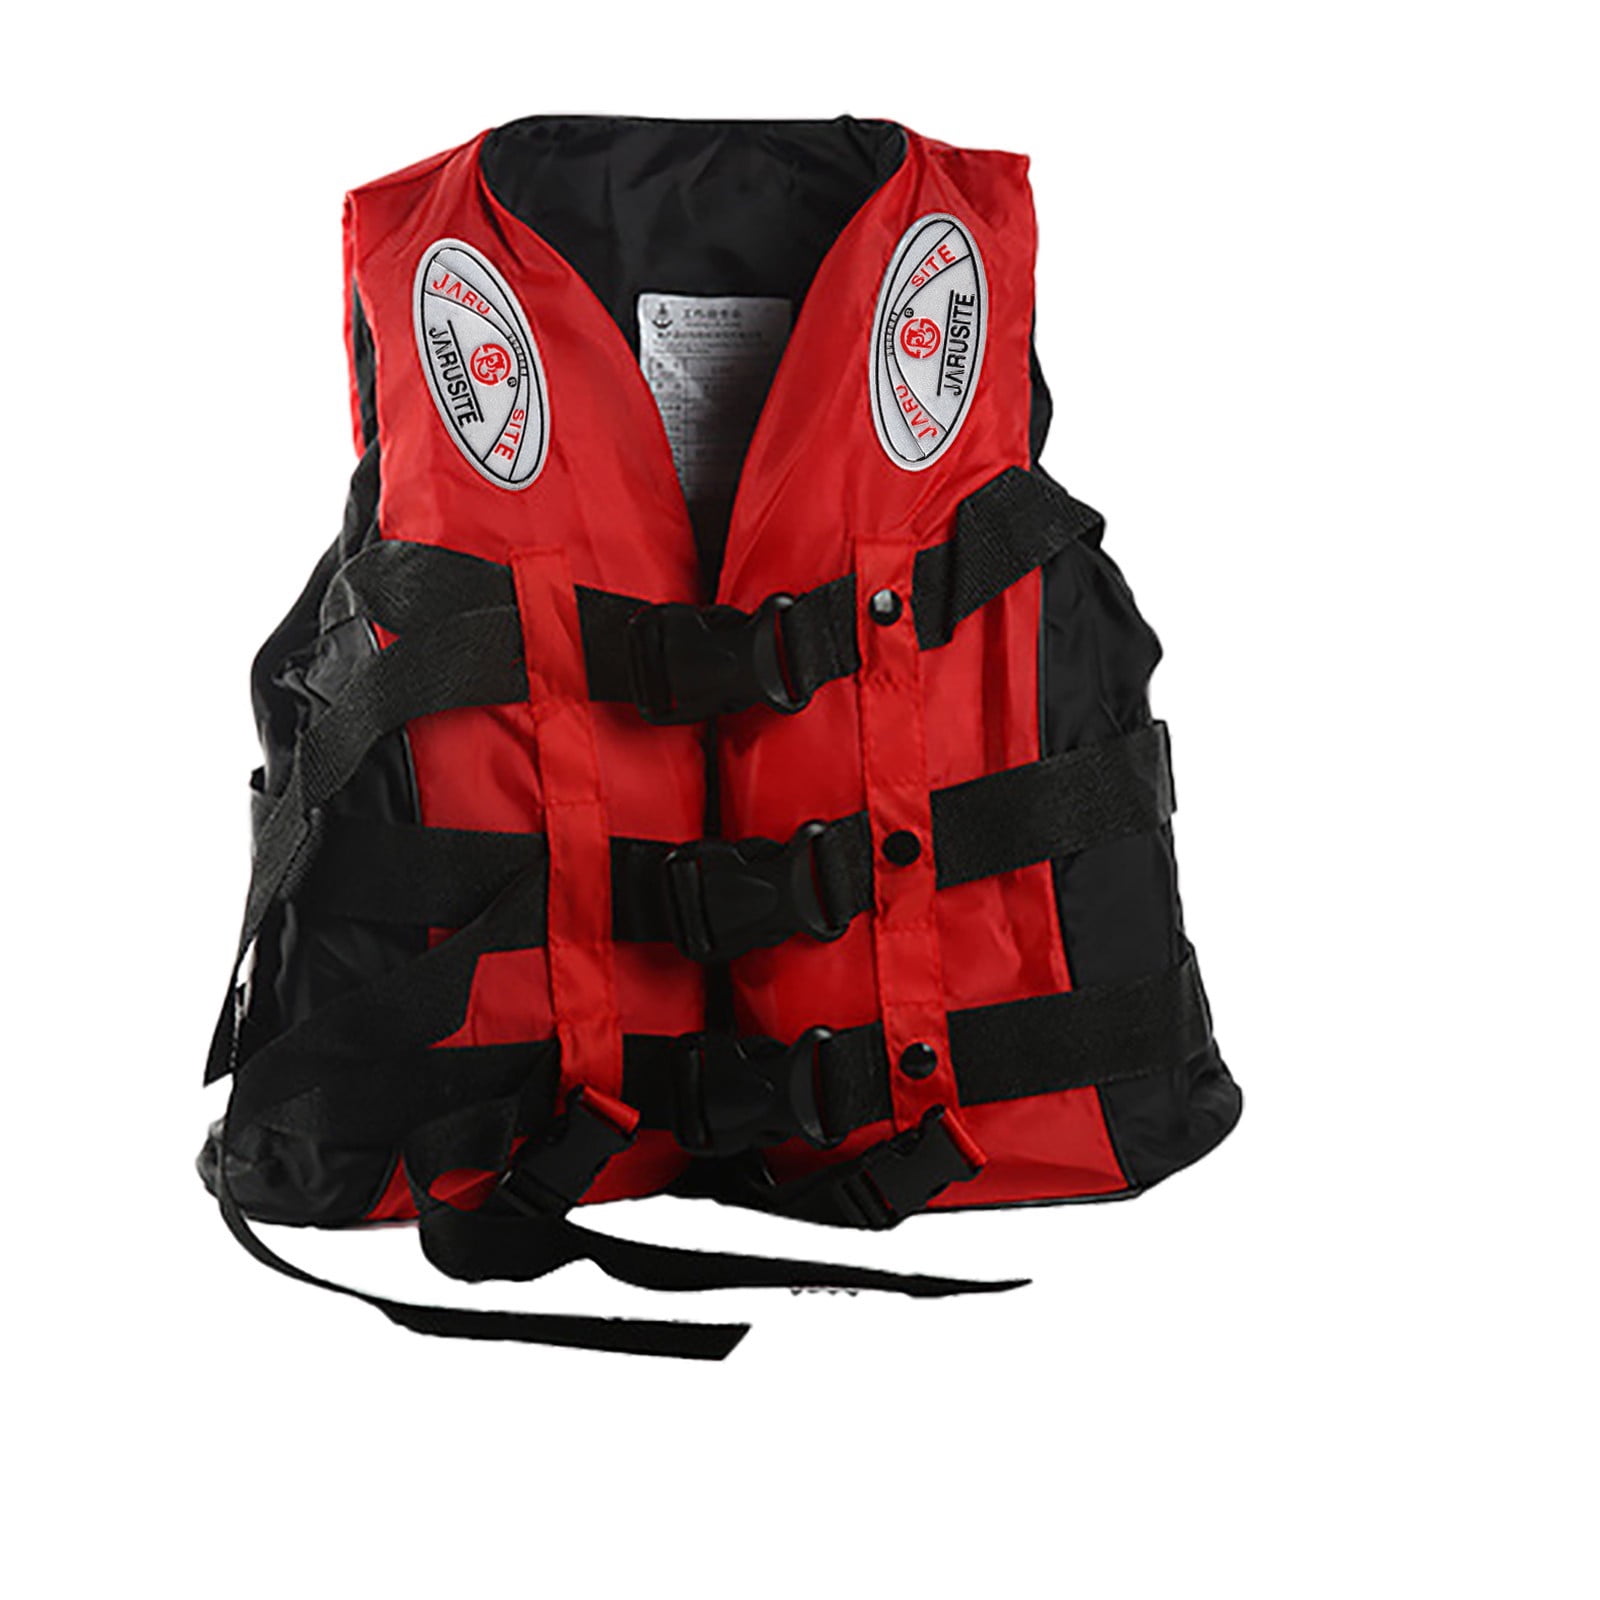 Adult Kid Life Jacket Kayak Ski Buoyancy Aid Vest Sailing Fishing Watersport New 